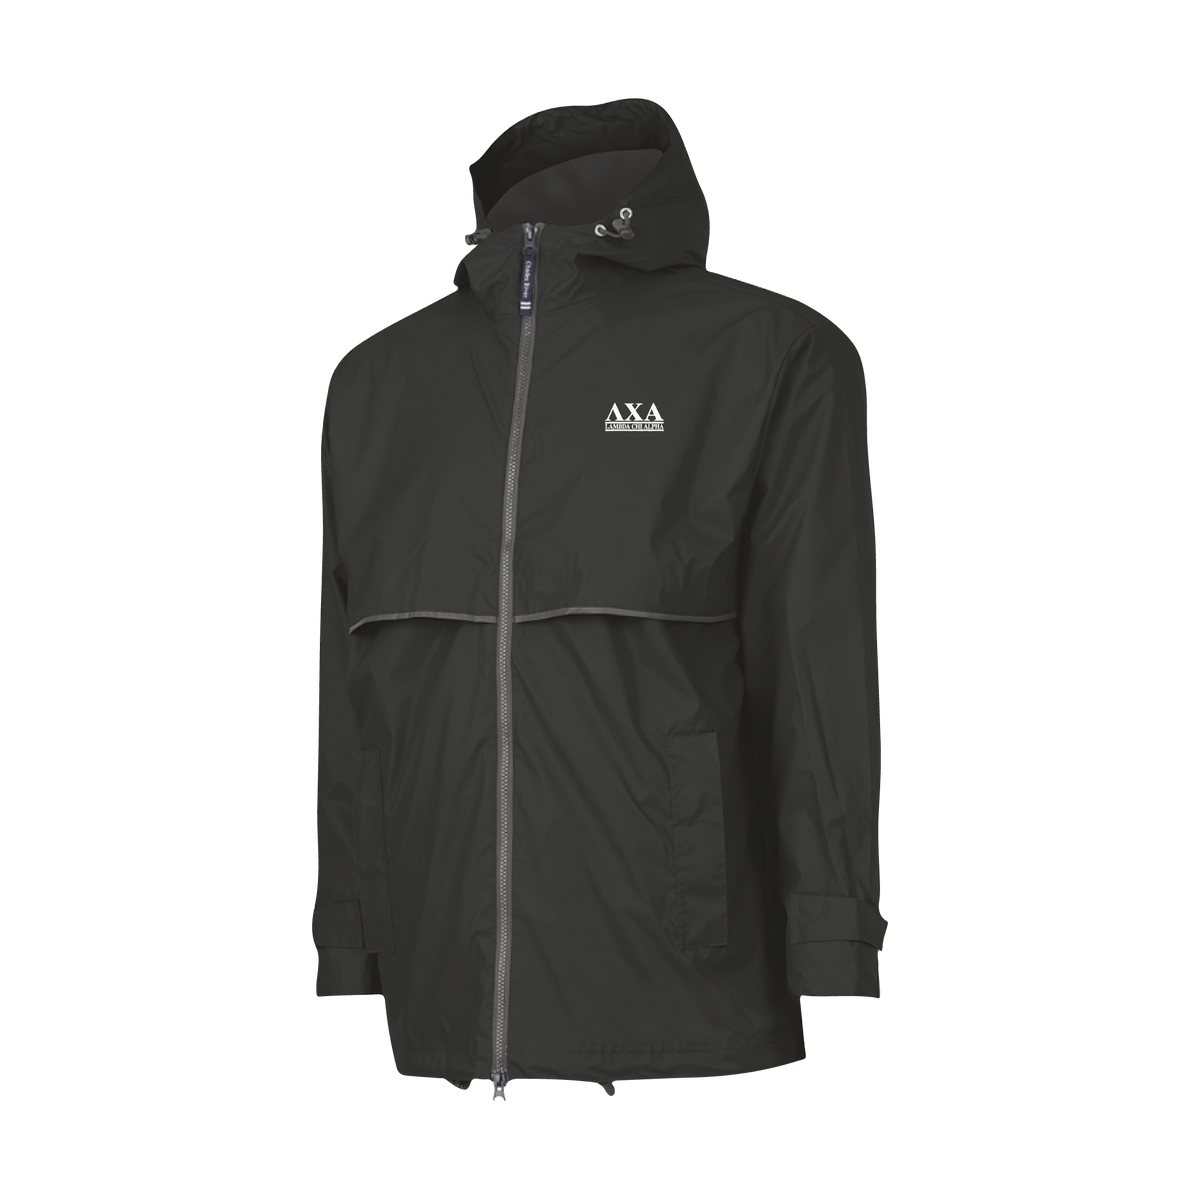 B-Unlimited Greek - Rain Jacket (LXA) - Charles River - 9199 - New Englander Rain Jacket - Black